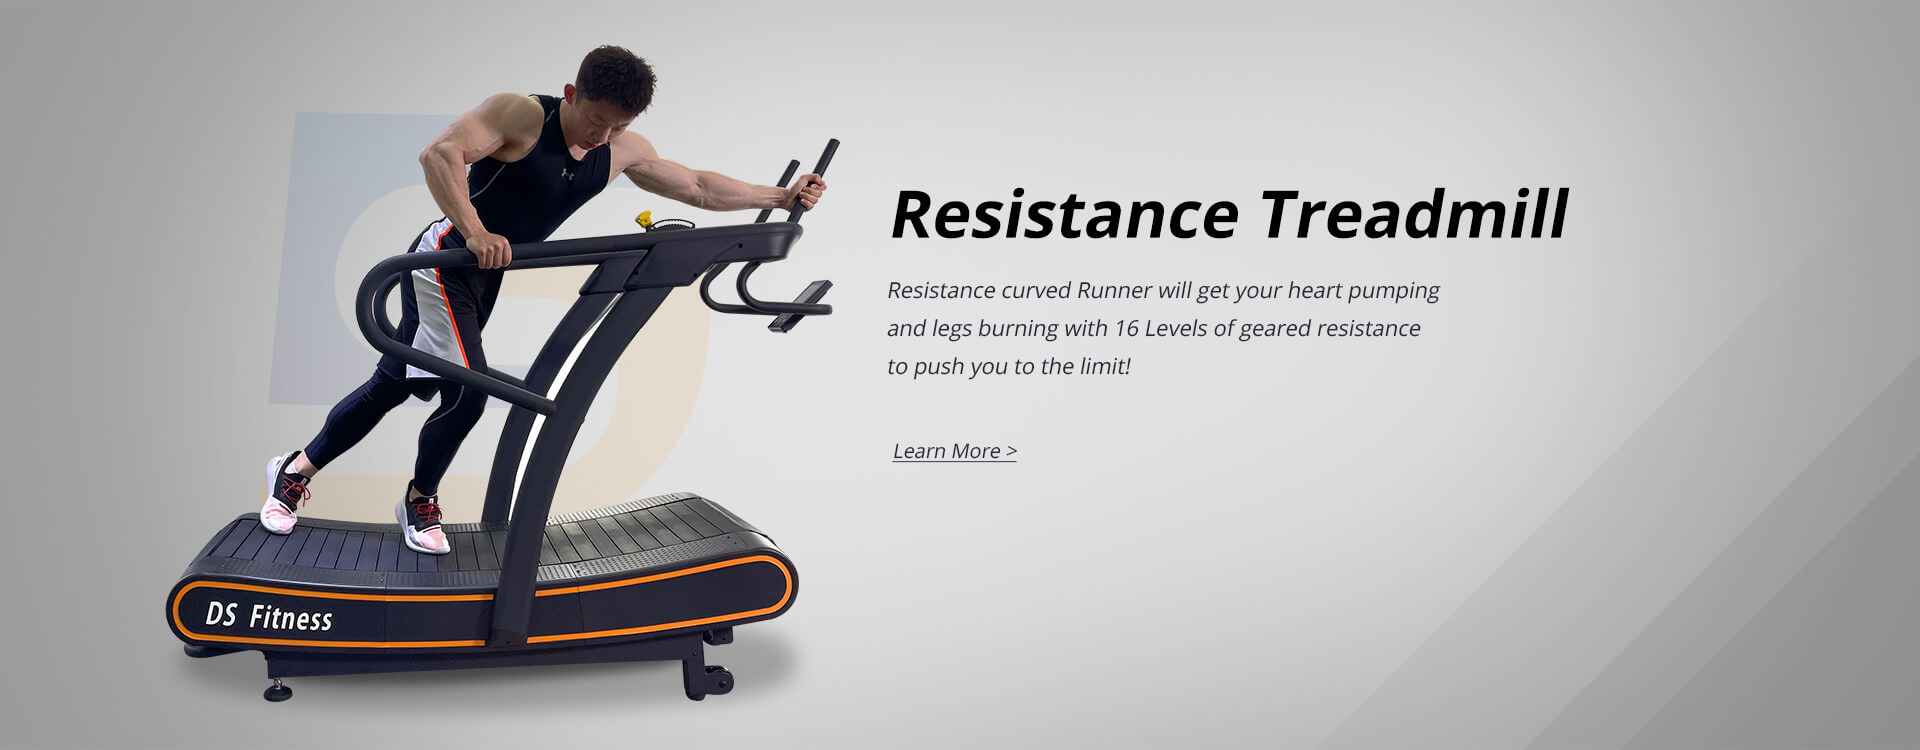 Resistance Treadmill